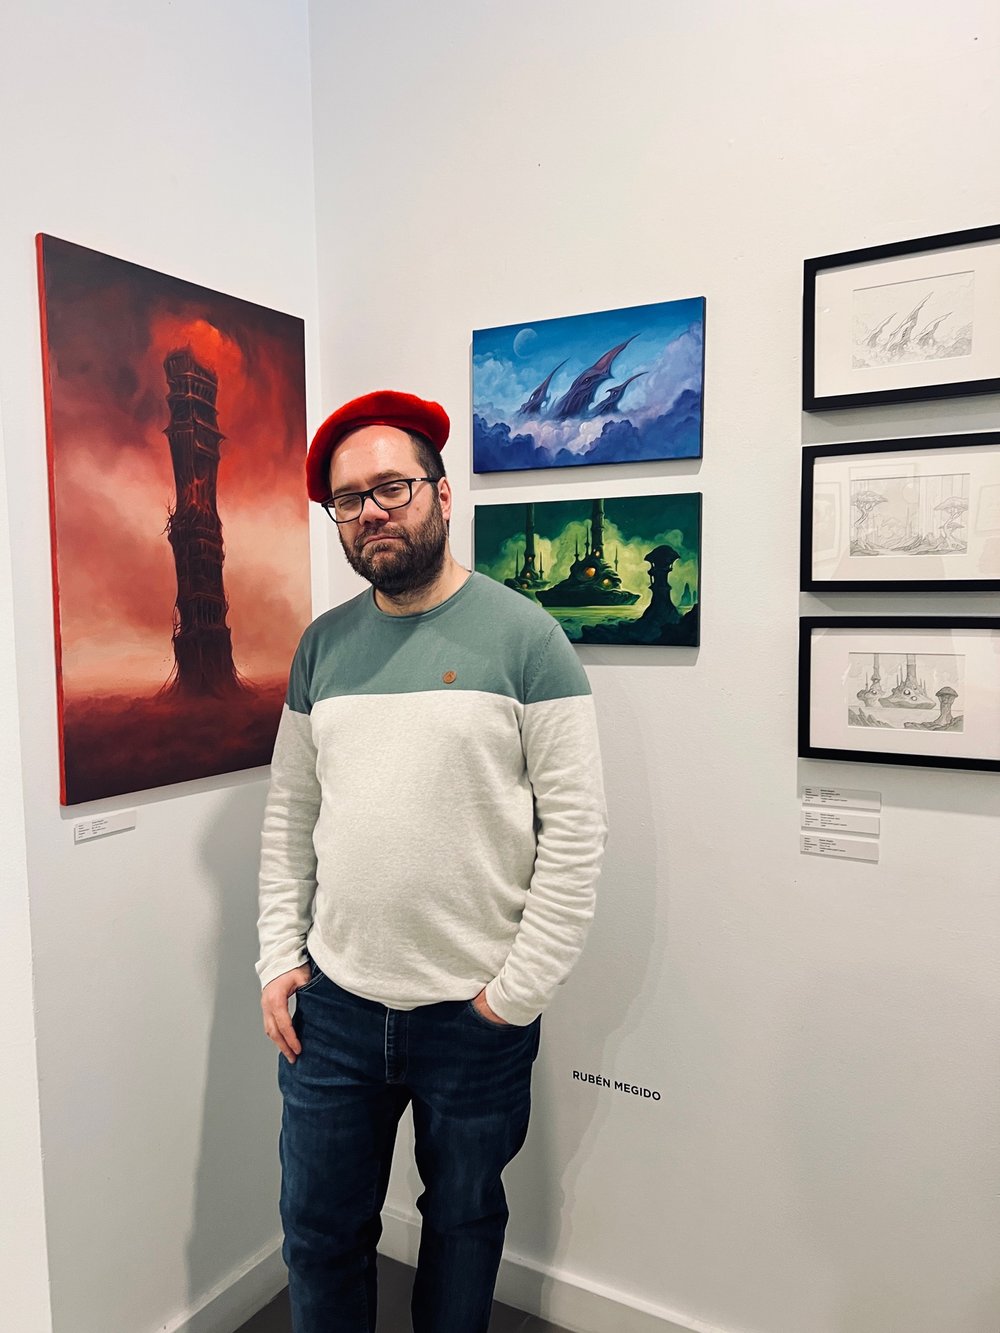 Ruben Megido posing in front of his work